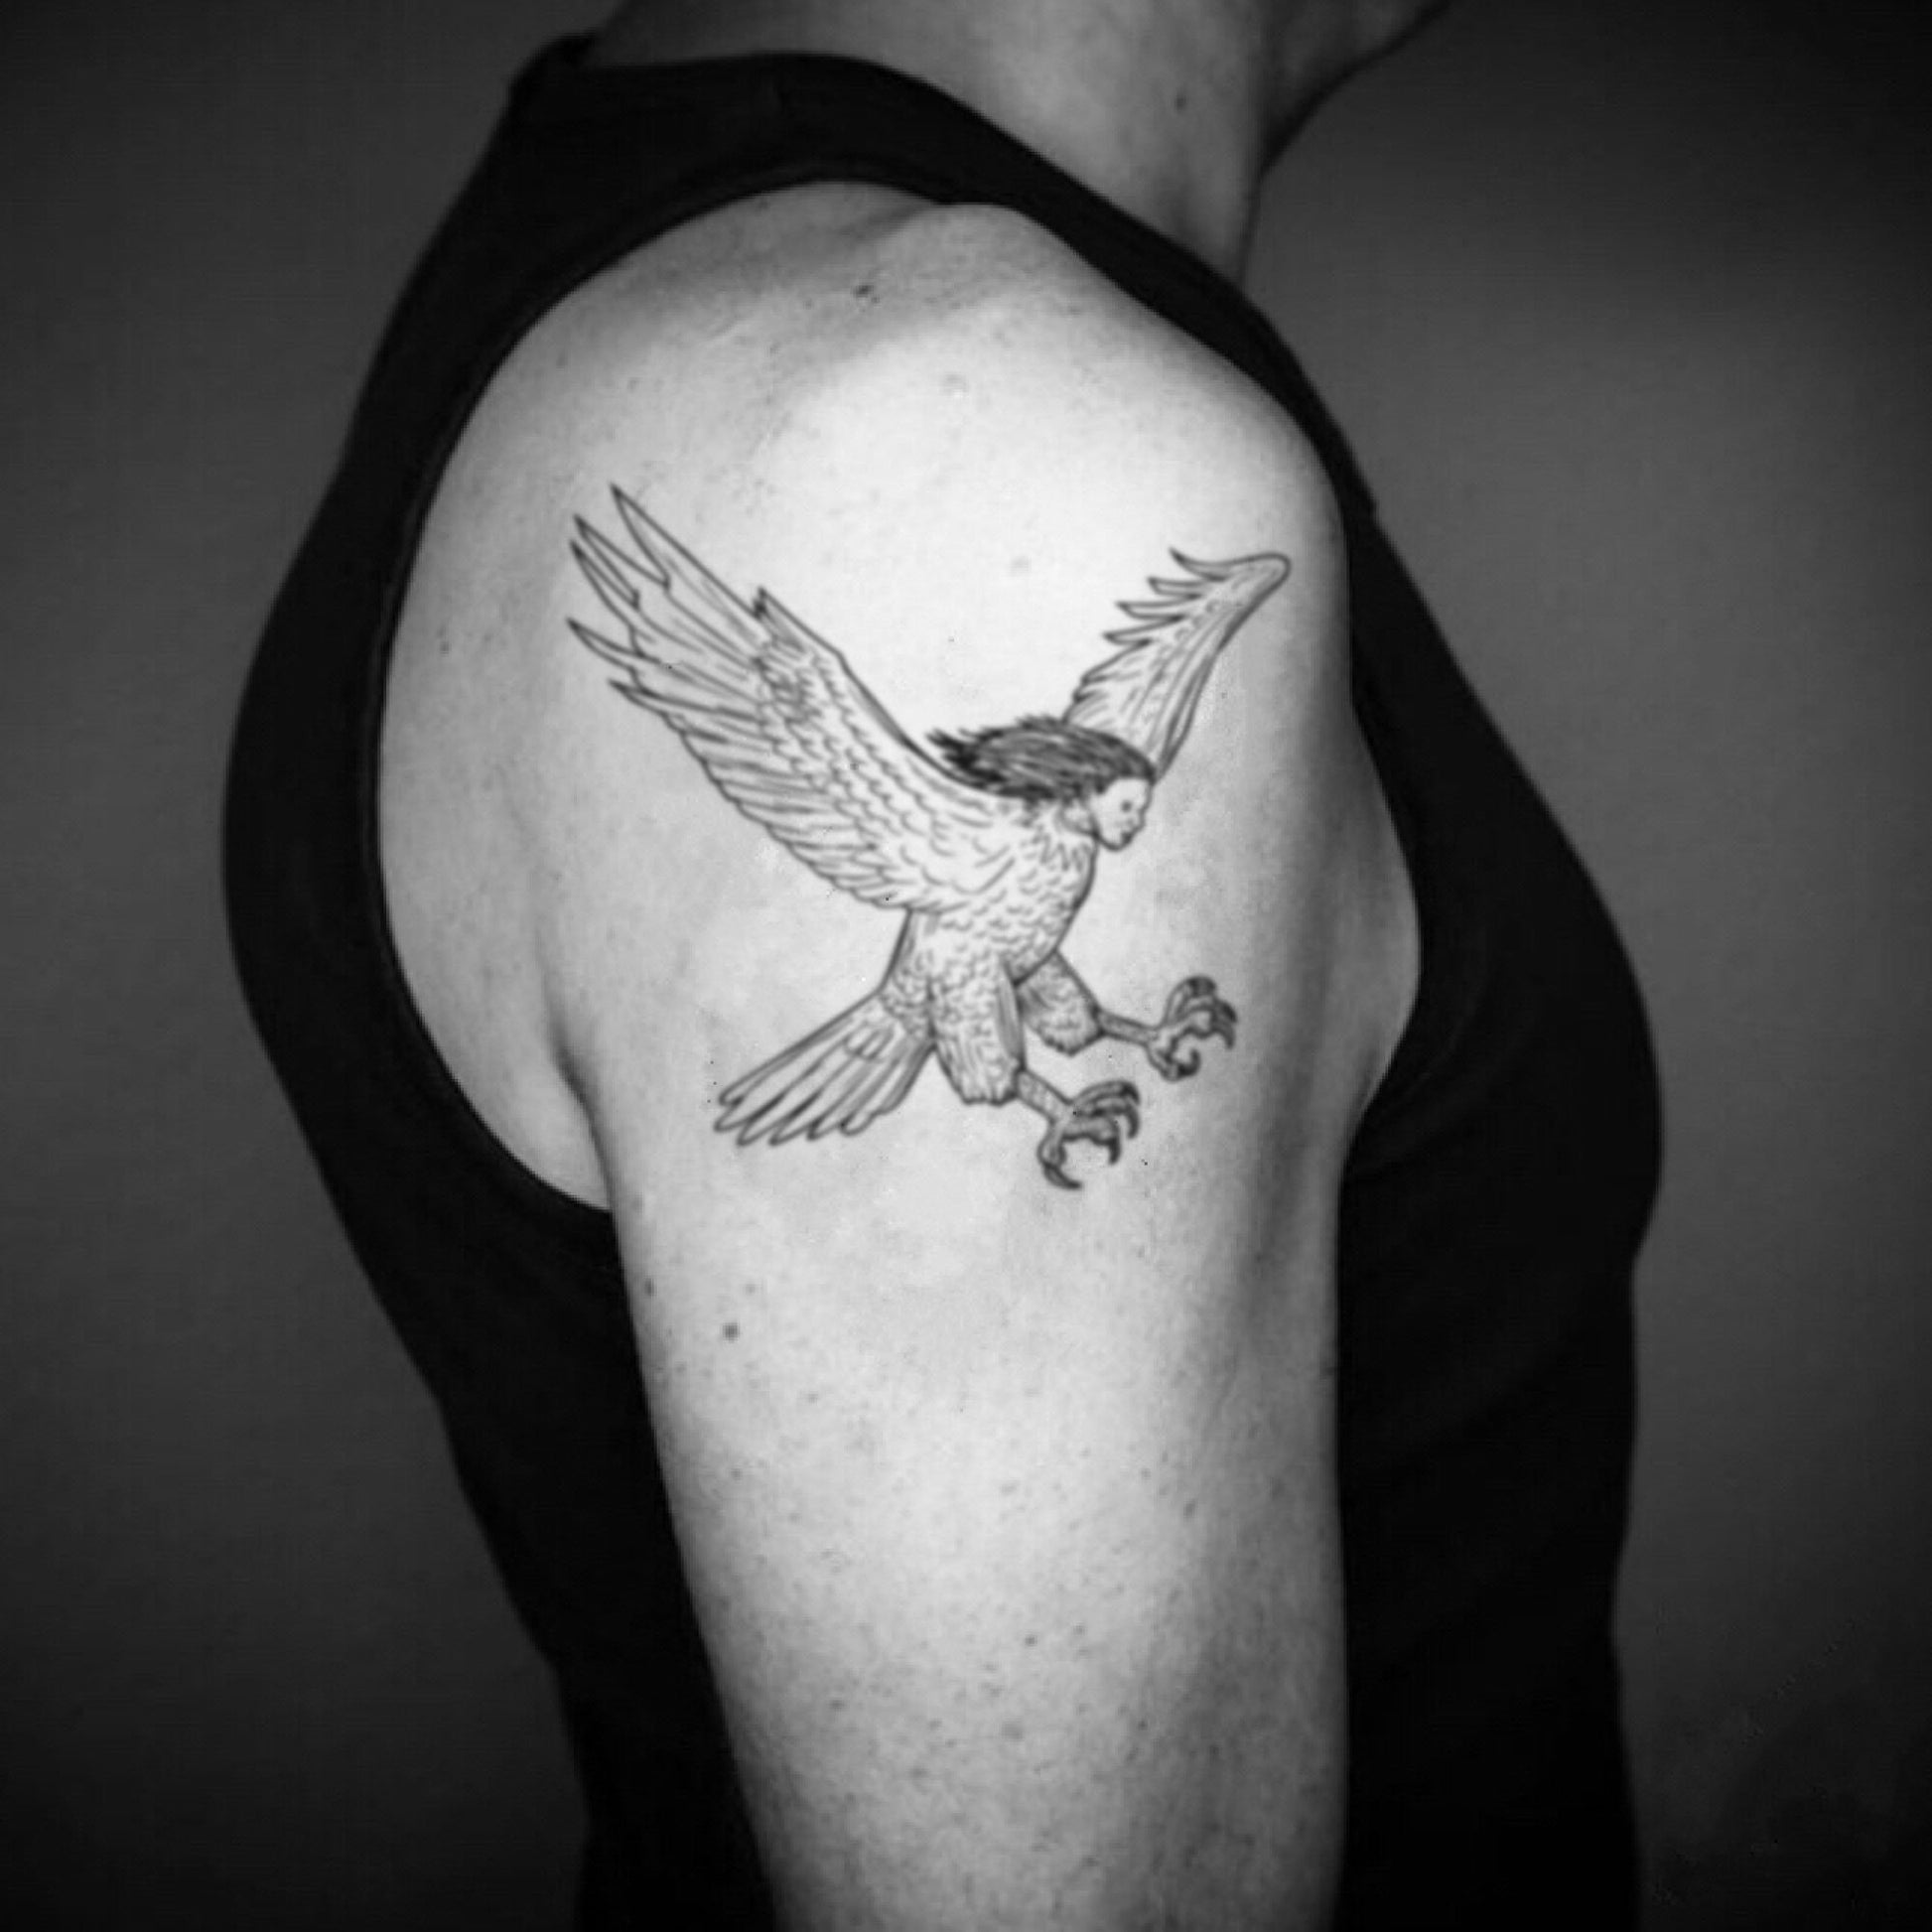 fake big harpy eagle illustrative temporary tattoo sticker design idea on upper arm